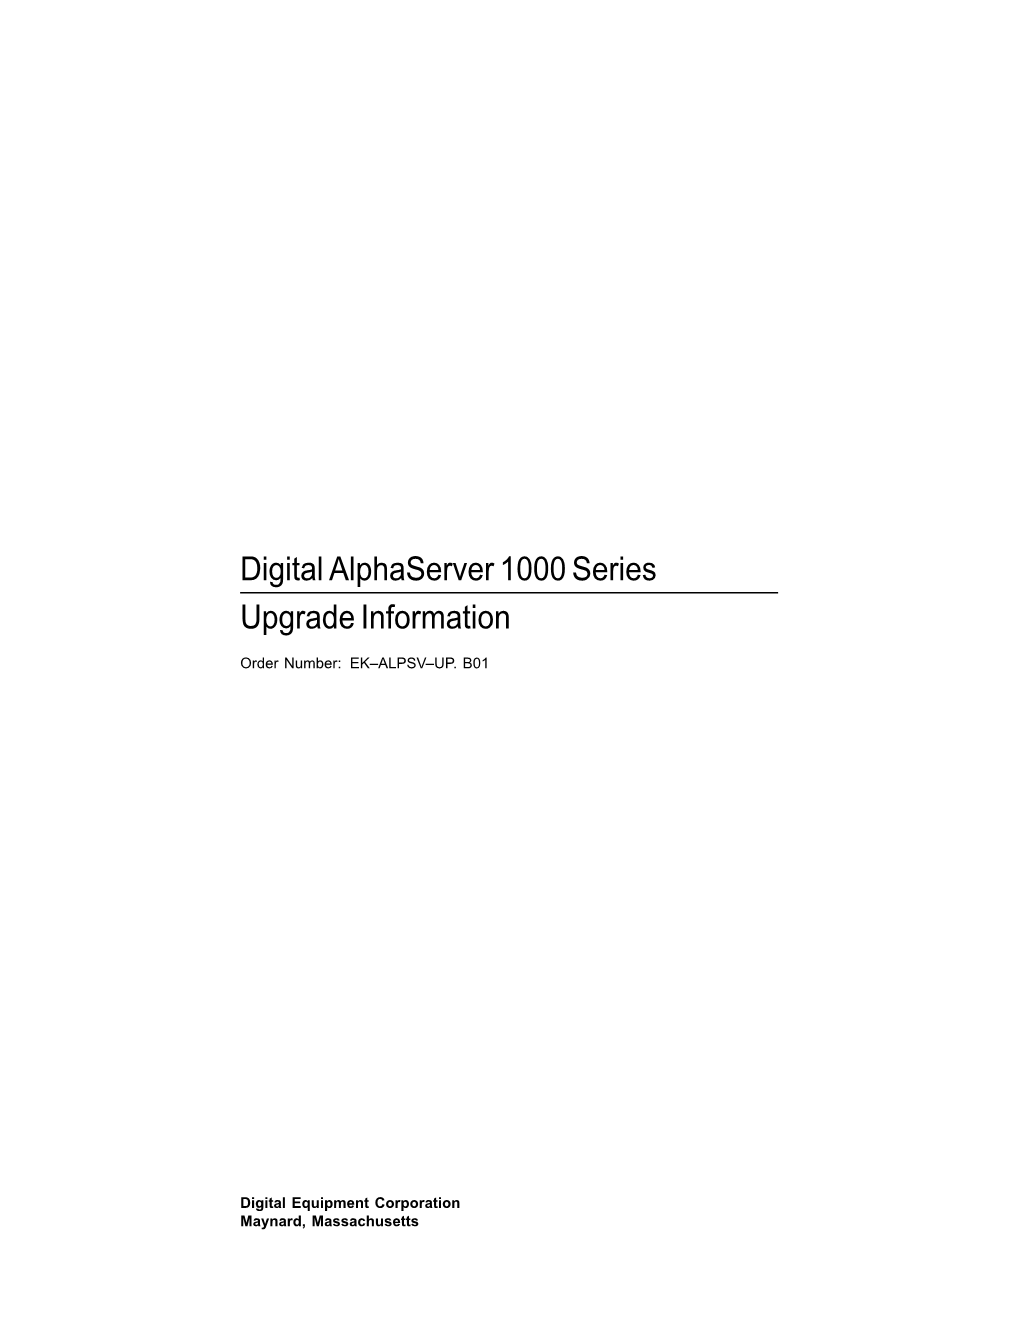 Alphaserver 1000 Series Upgrade Information